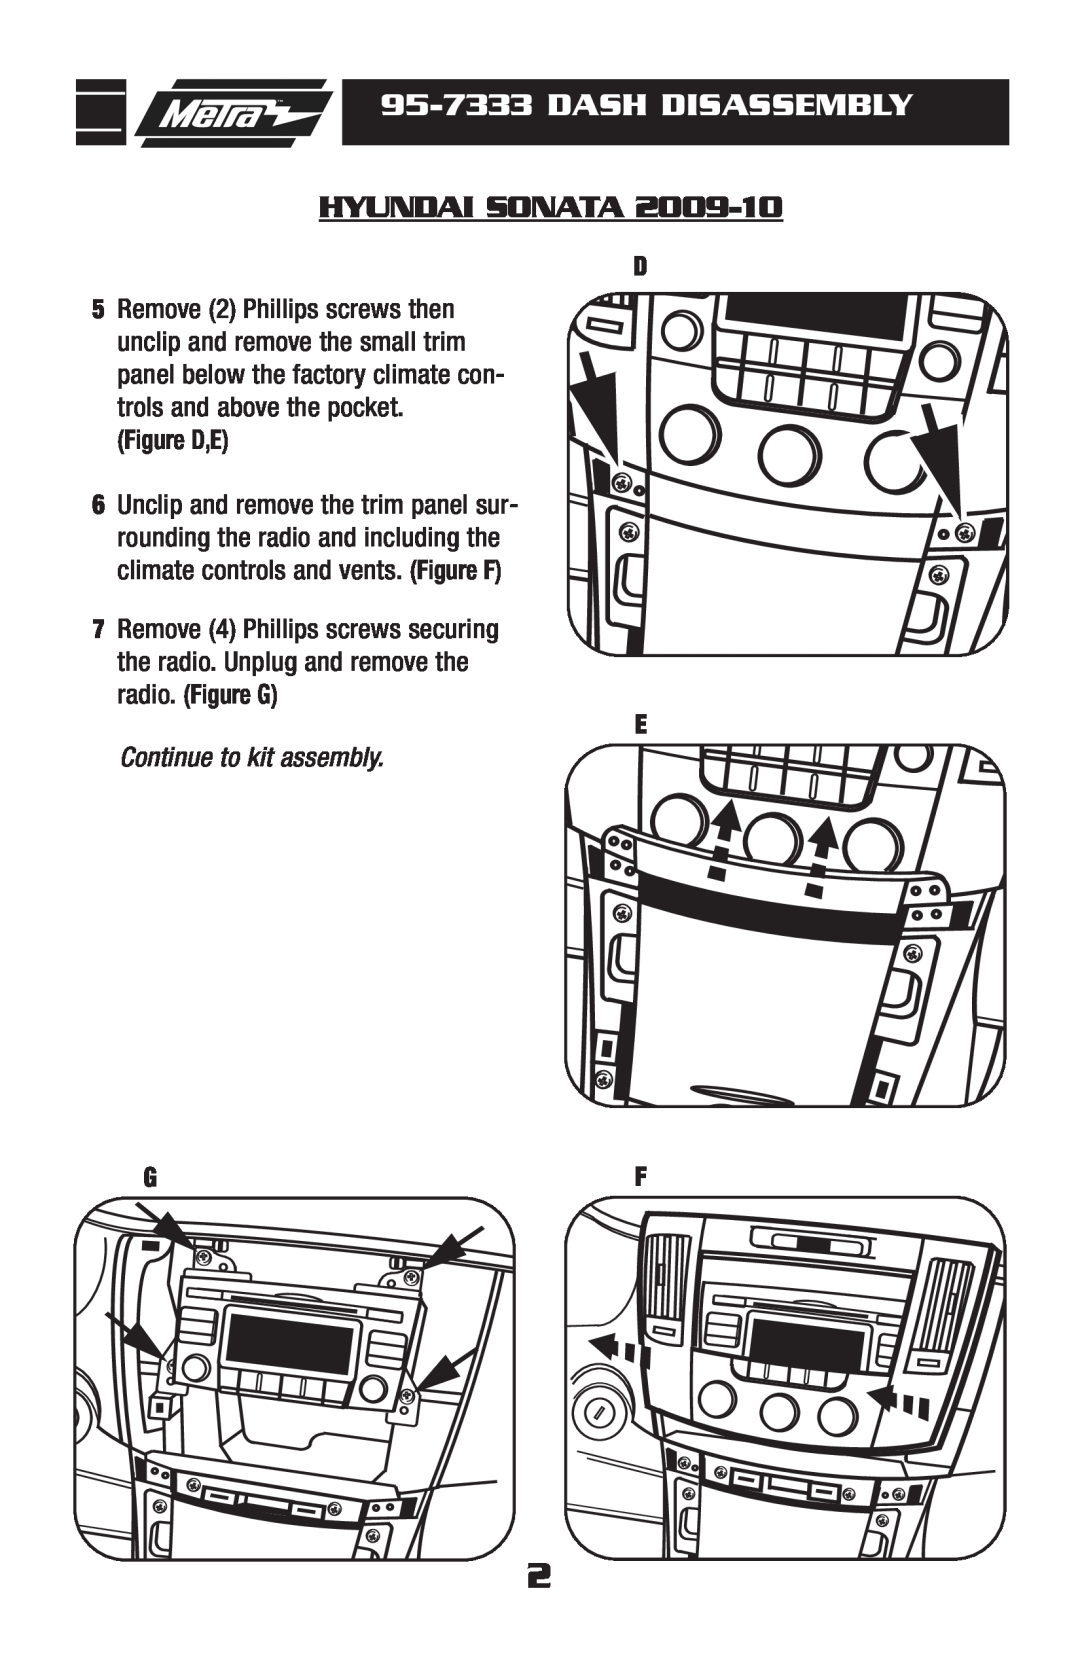 Hyundai 95-7333 installation instructions Figure D,E, Continue to kit assembly, Dash Disassembly, Hyundai Sonata 